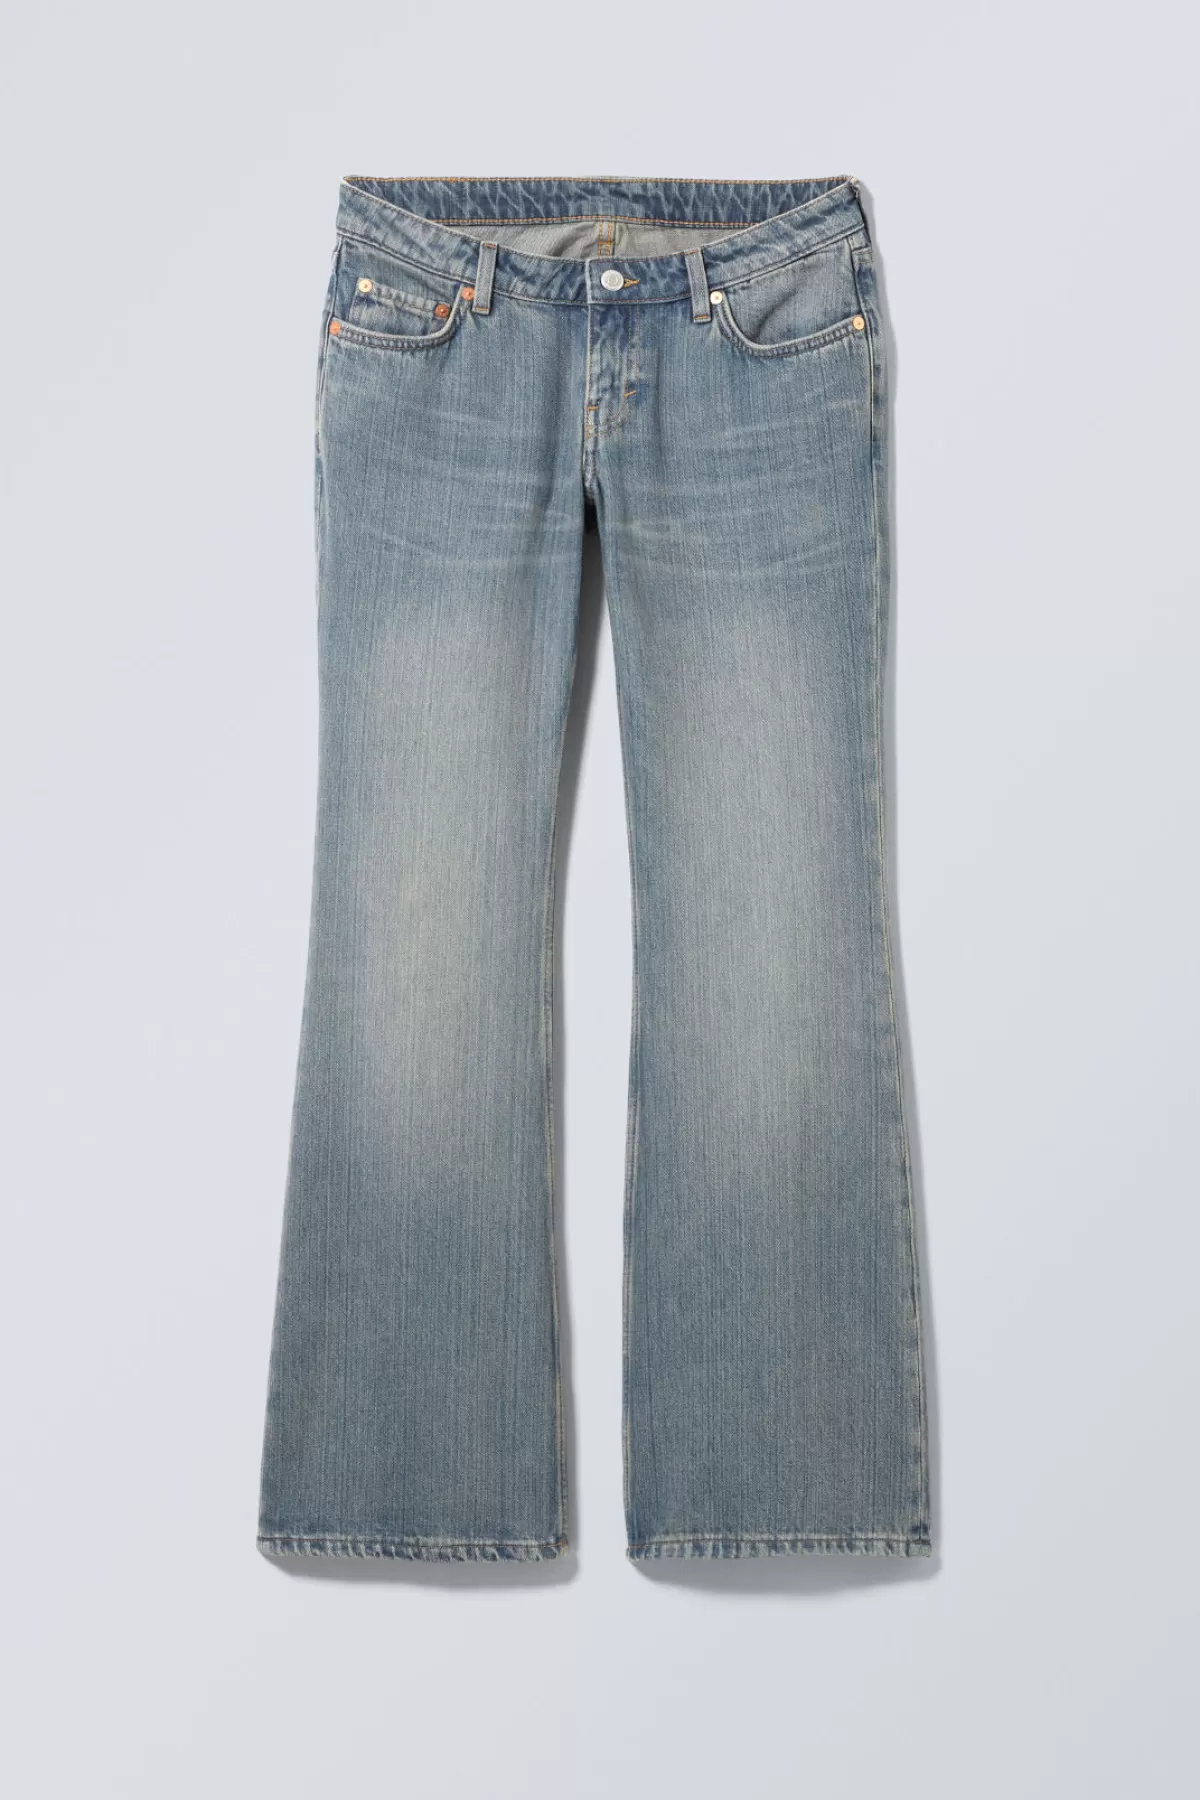 Weekday Nova Low Slim Bootcut Jeans Trove Blue Flash Sale